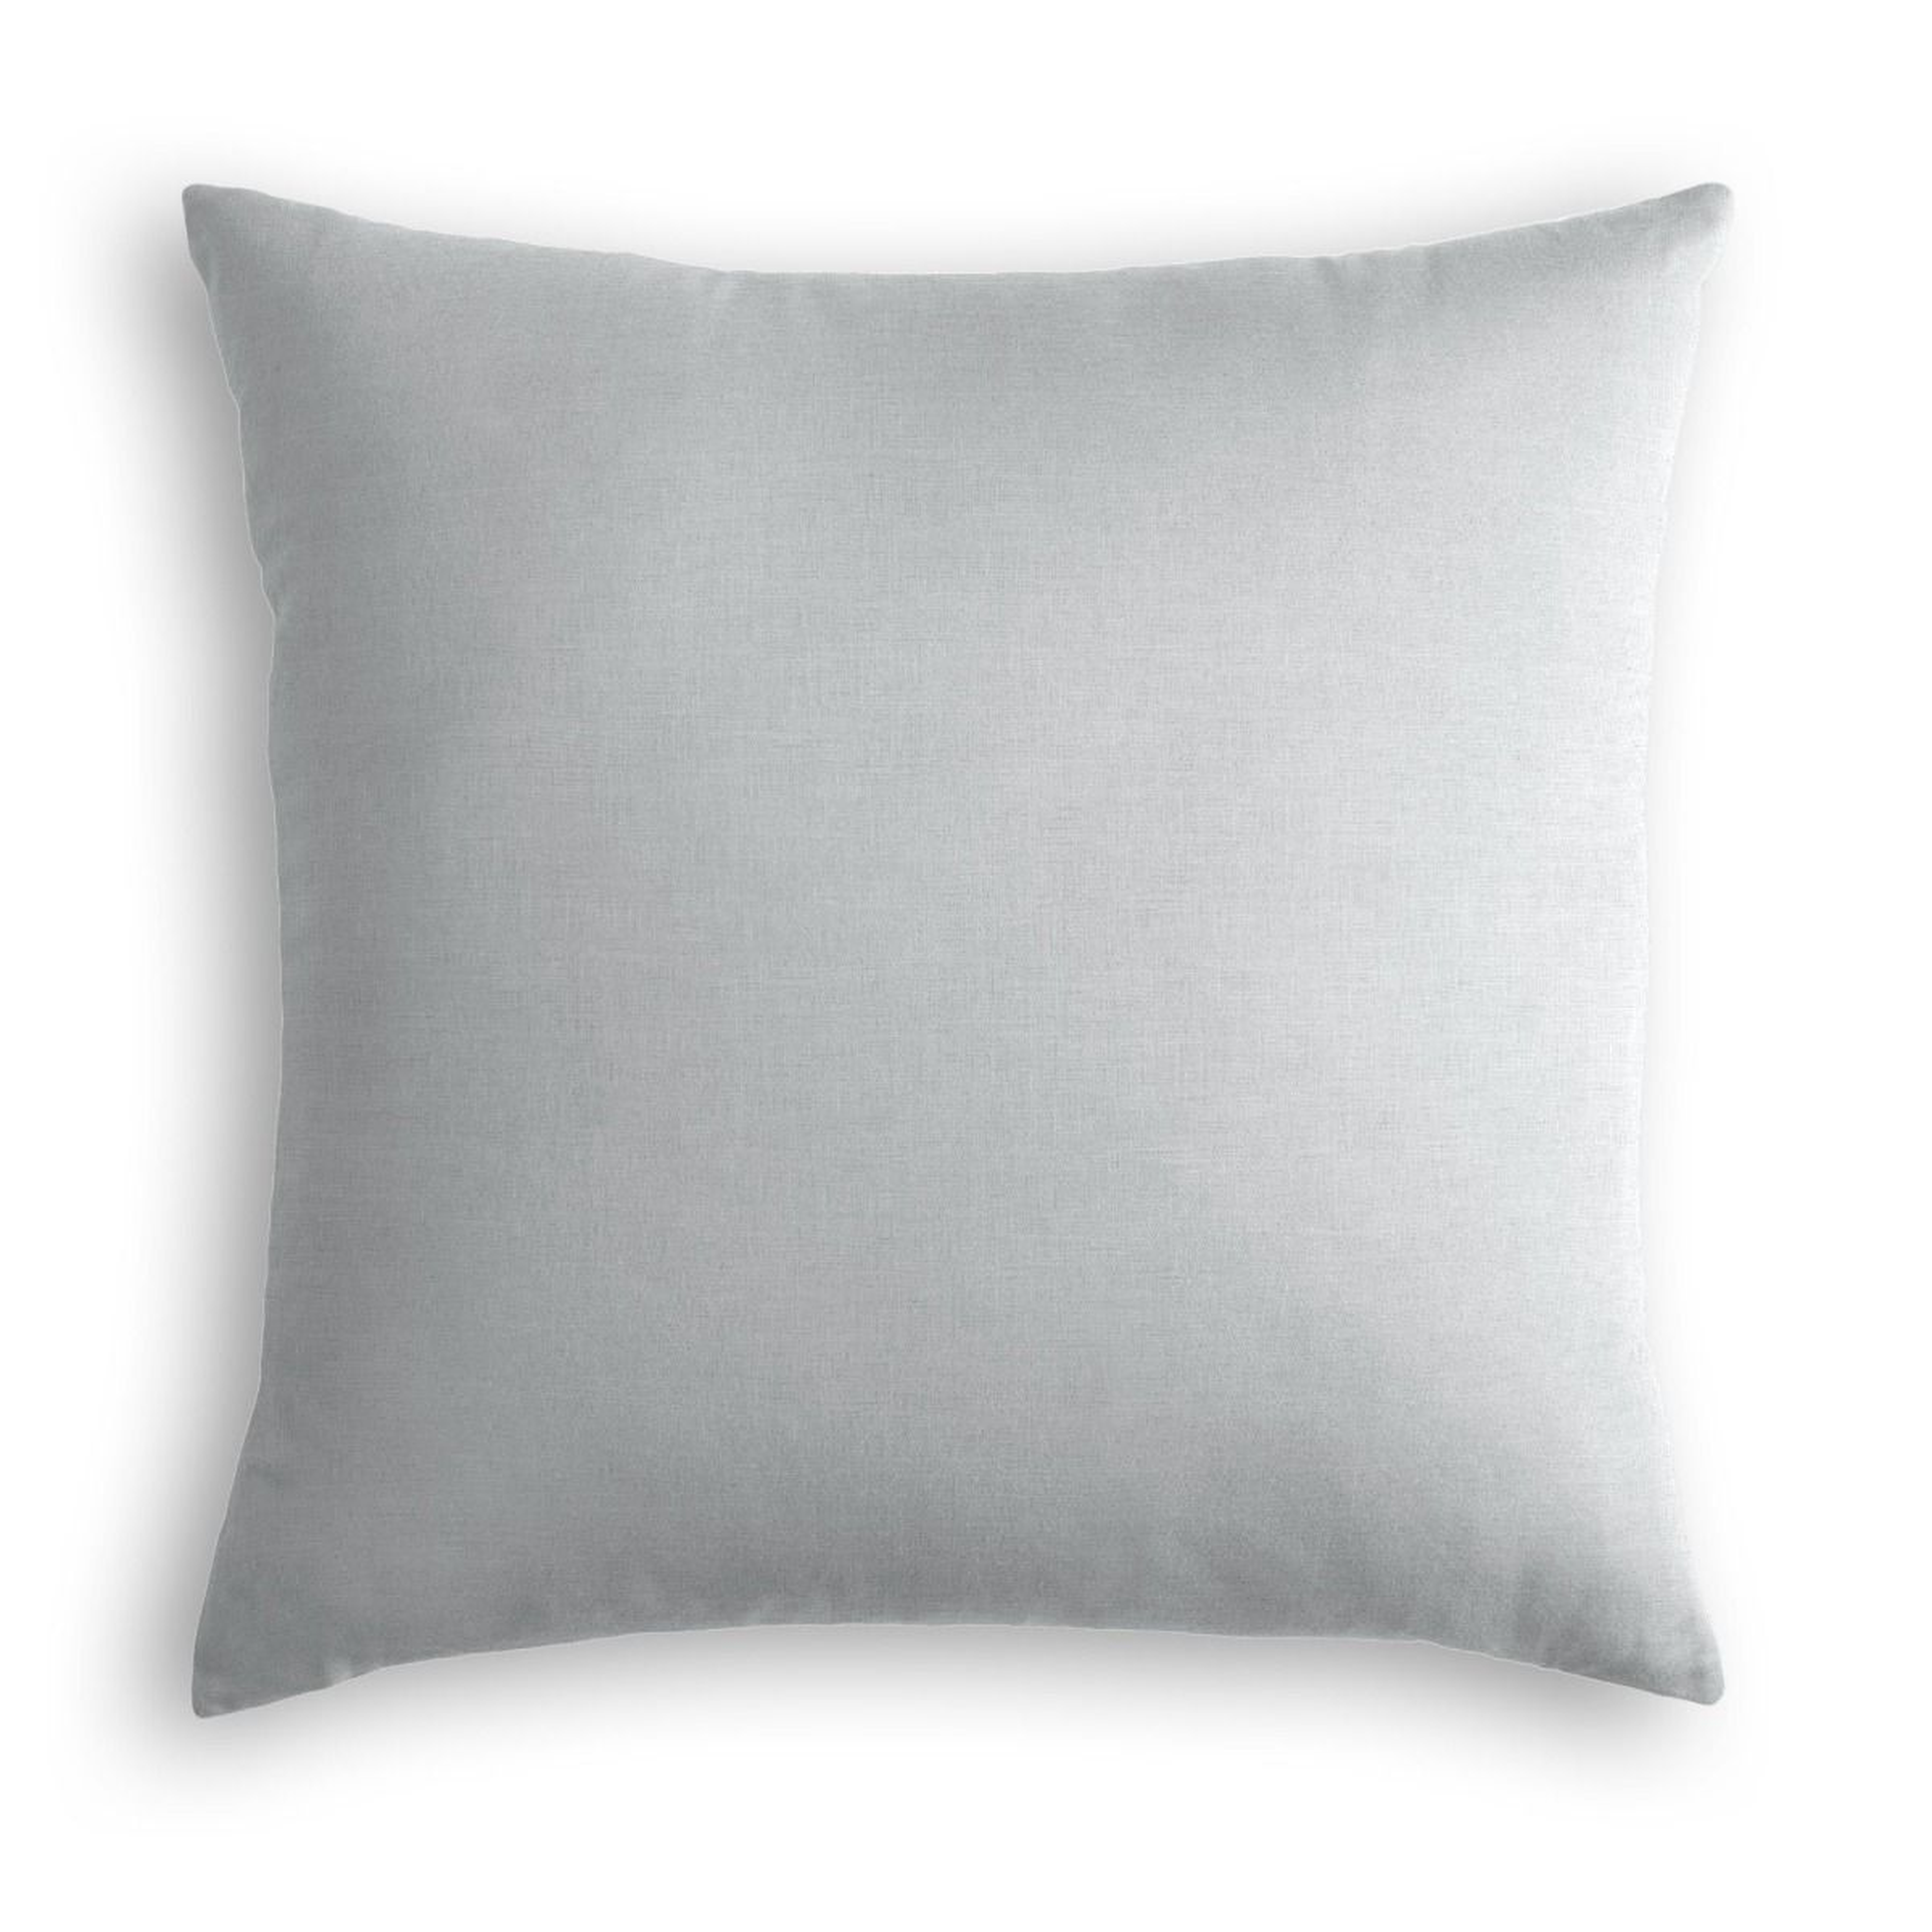 Classic Linen Pillow, Classic Gray, 18" x 18" - Havenly Essentials